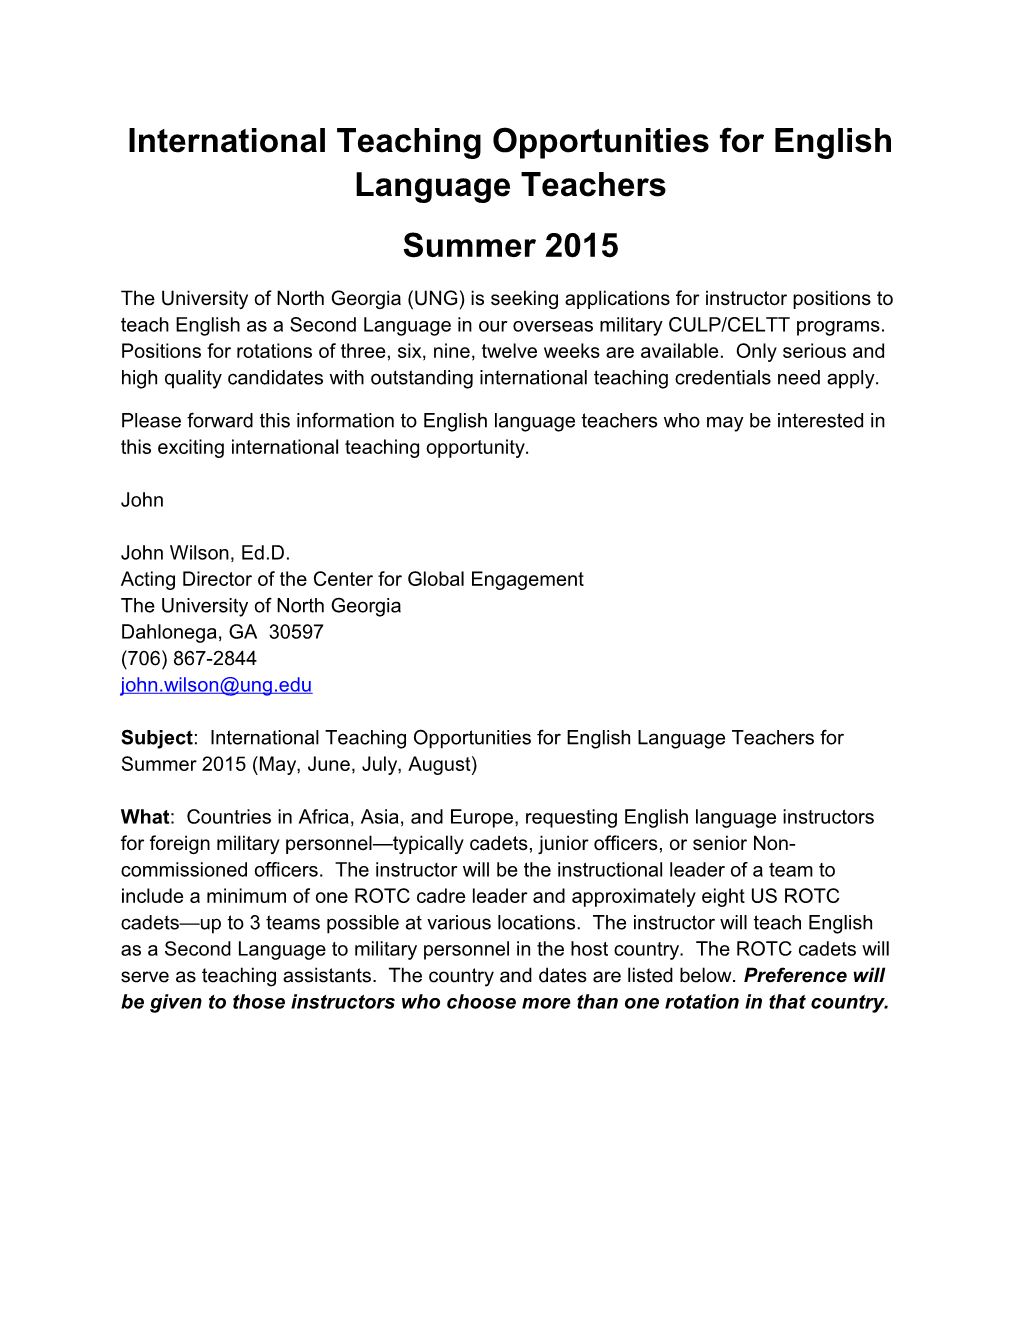 International Teaching Opportunitiesfor English Language Teachers